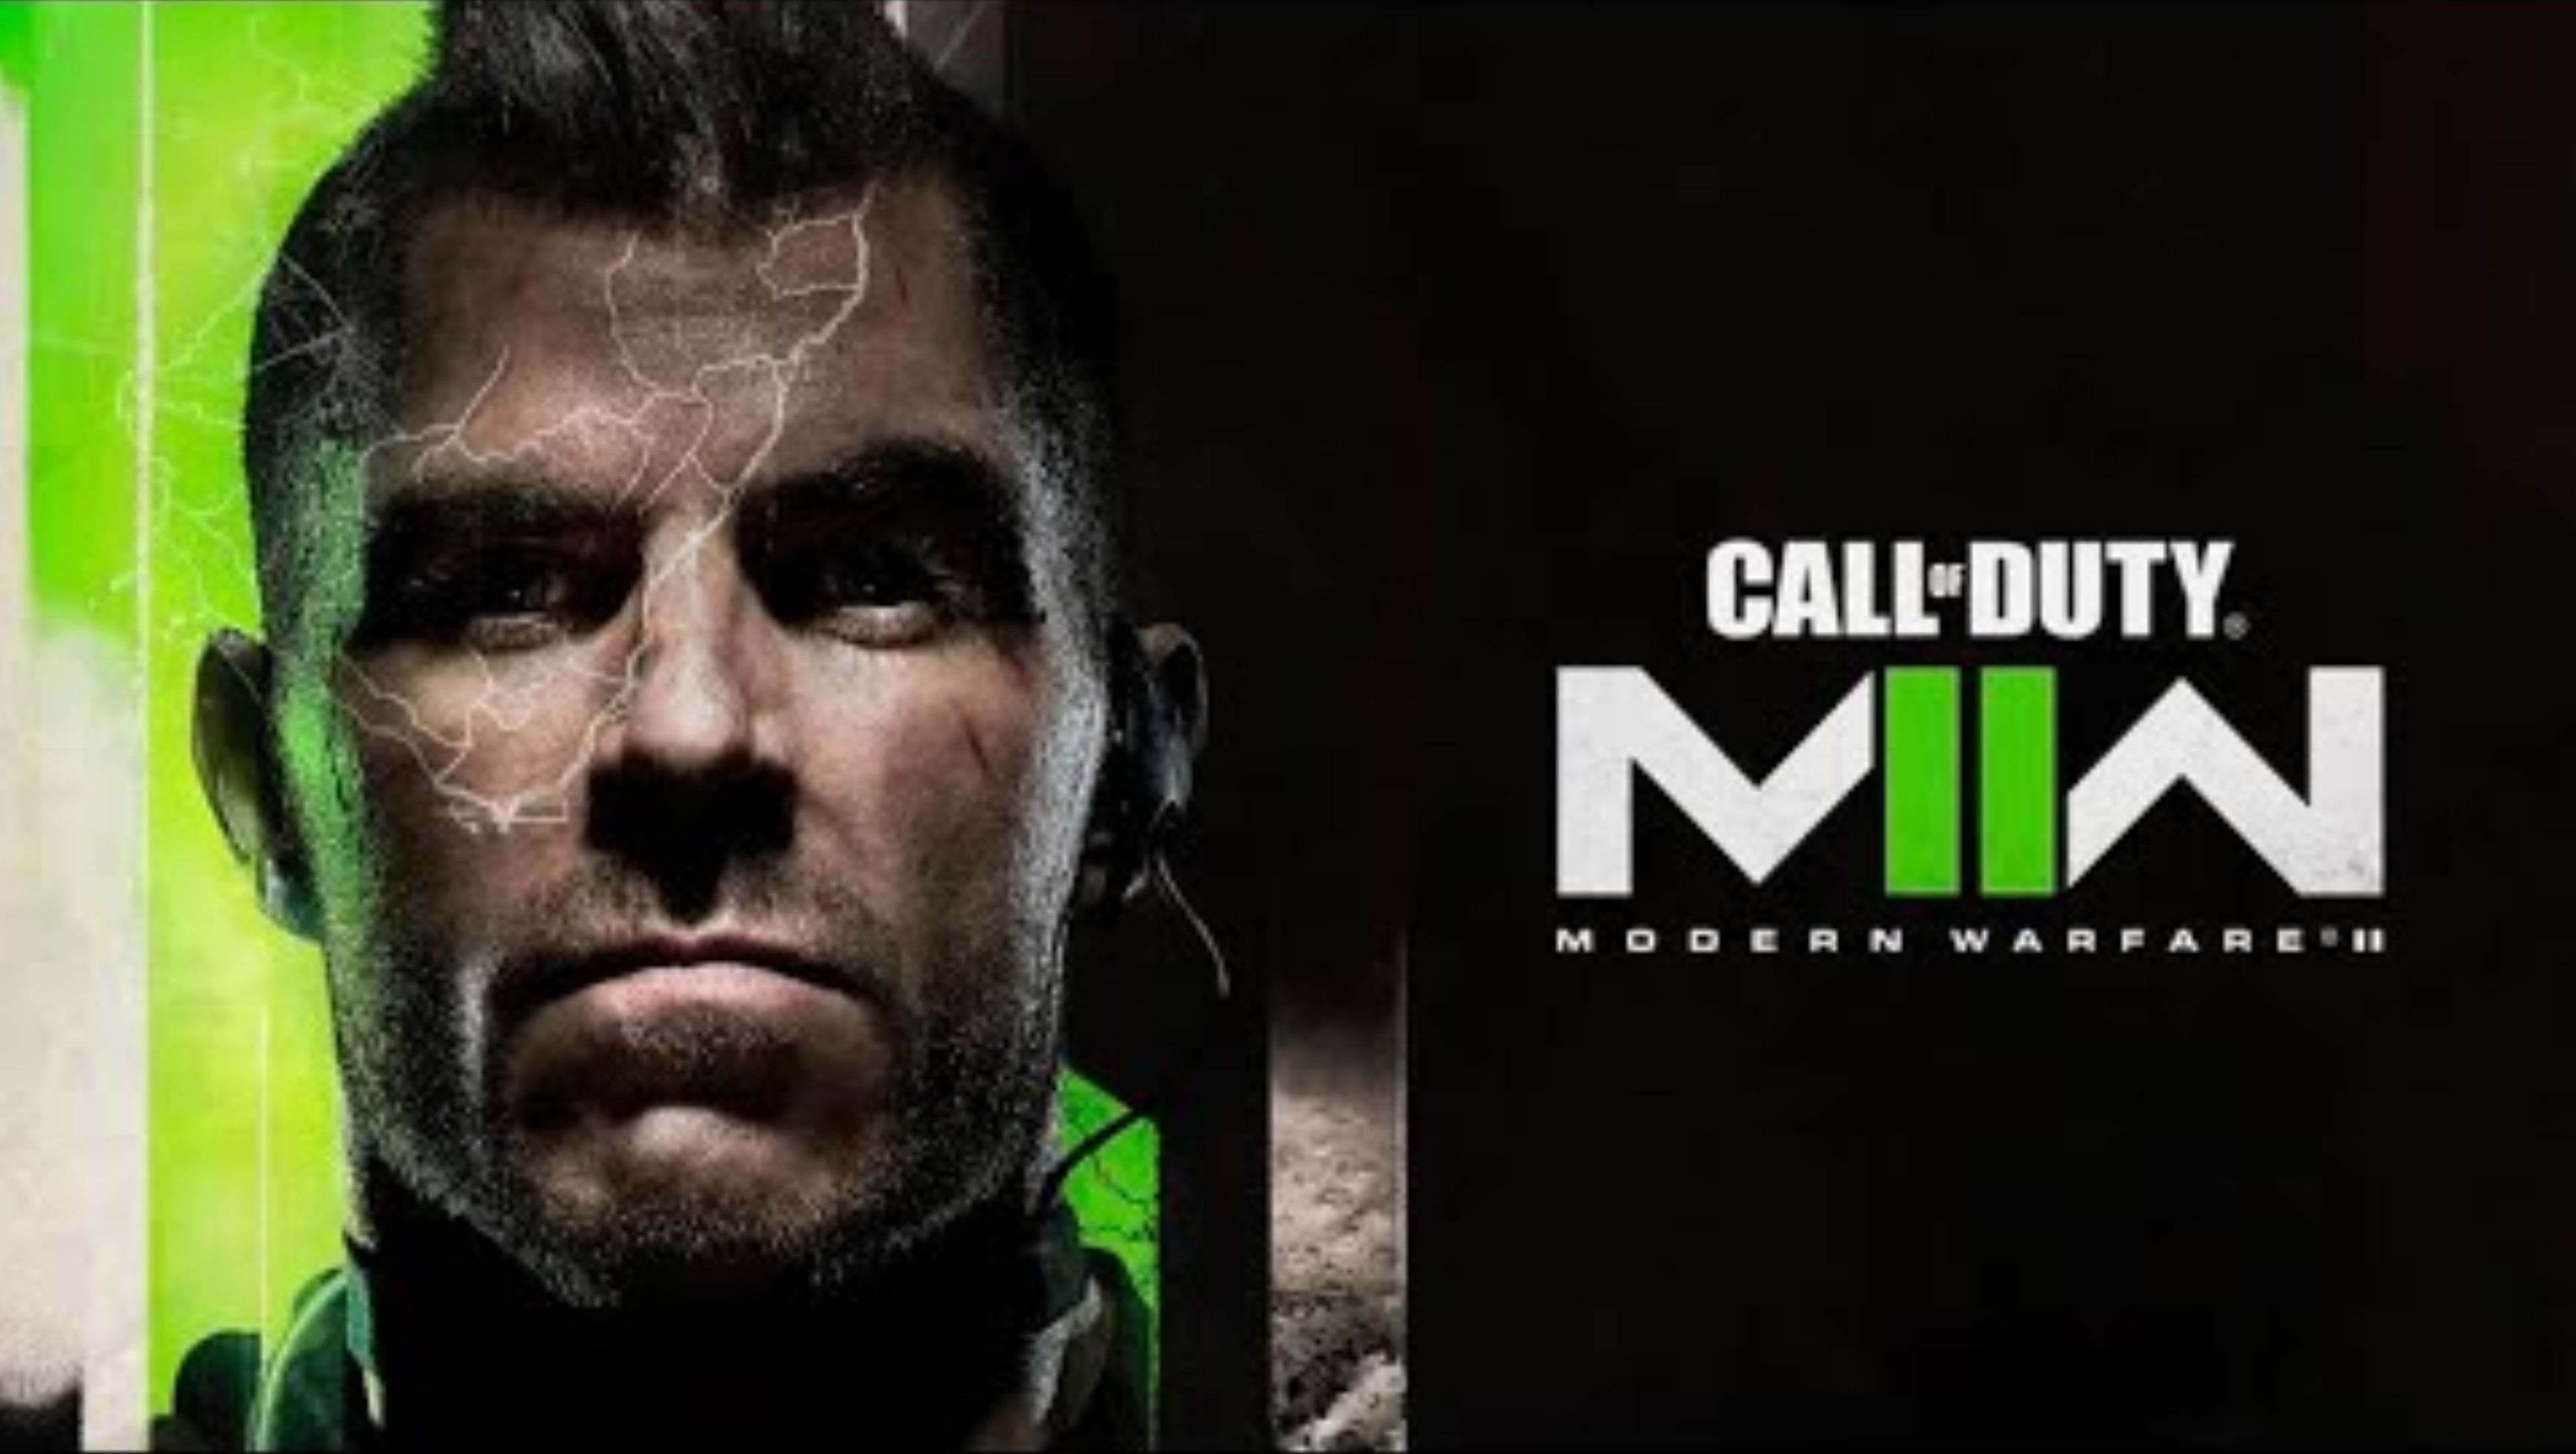 ВСТРЕЧА С ГЛАВОЙ НАРКОМАФИИ - Call of Duty_ Modern Warfare 2 #4